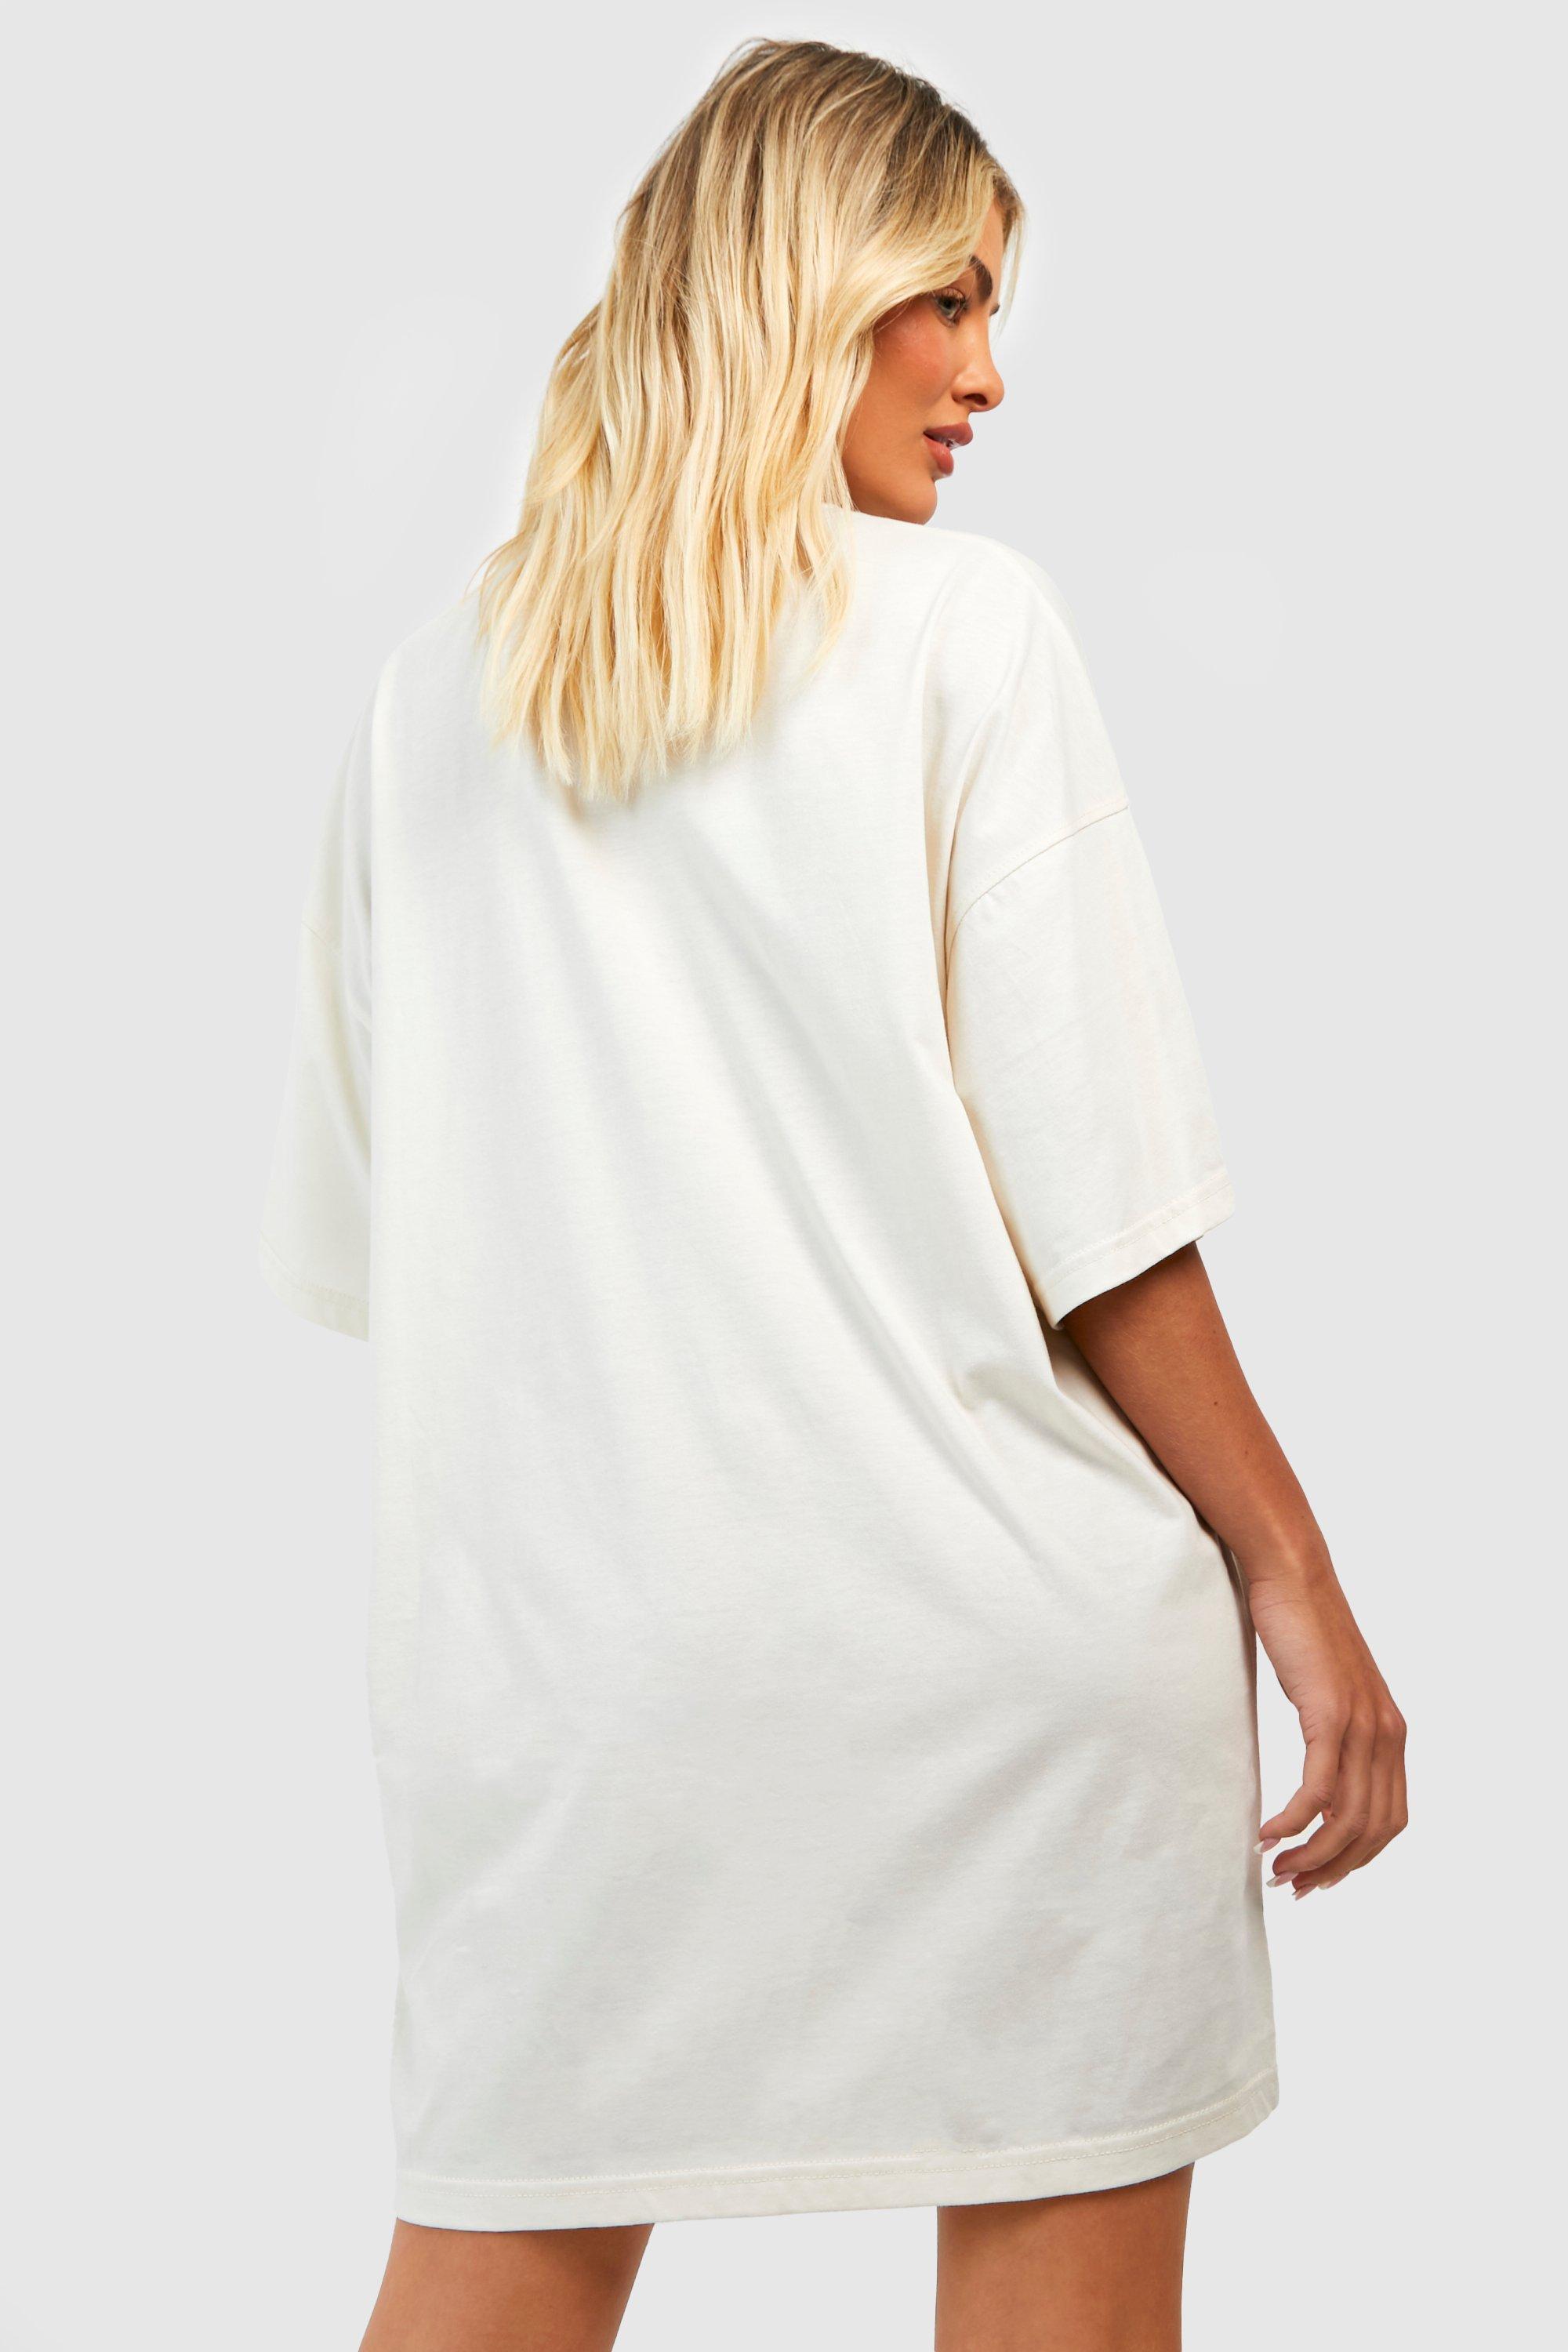 White Oversized Juicy Graphic T Shirt Dress